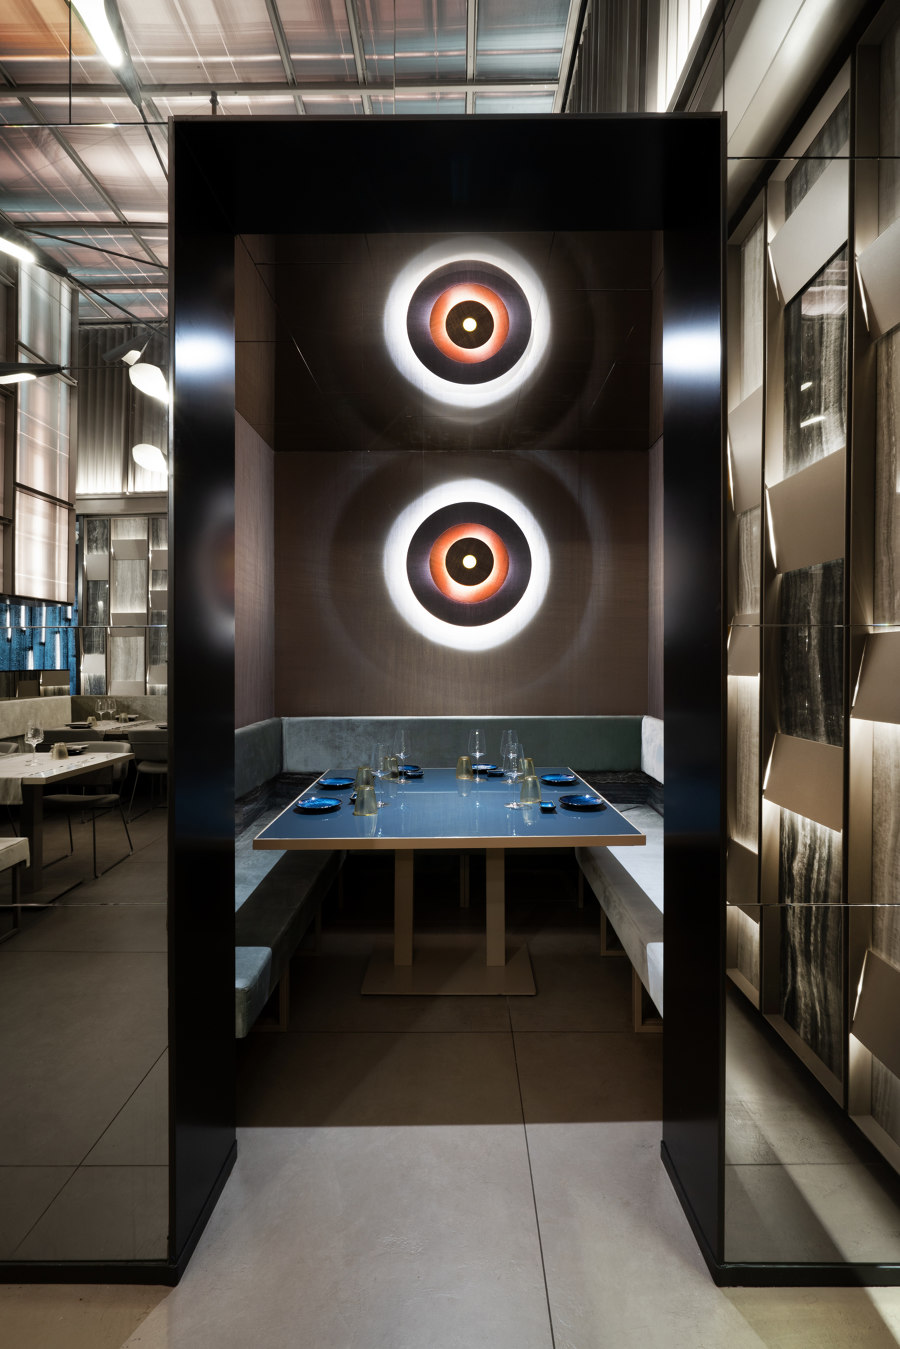 Sushi Club Corbetta von LAI STUDIO, Maurizio Lai | Restaurant-Interieurs